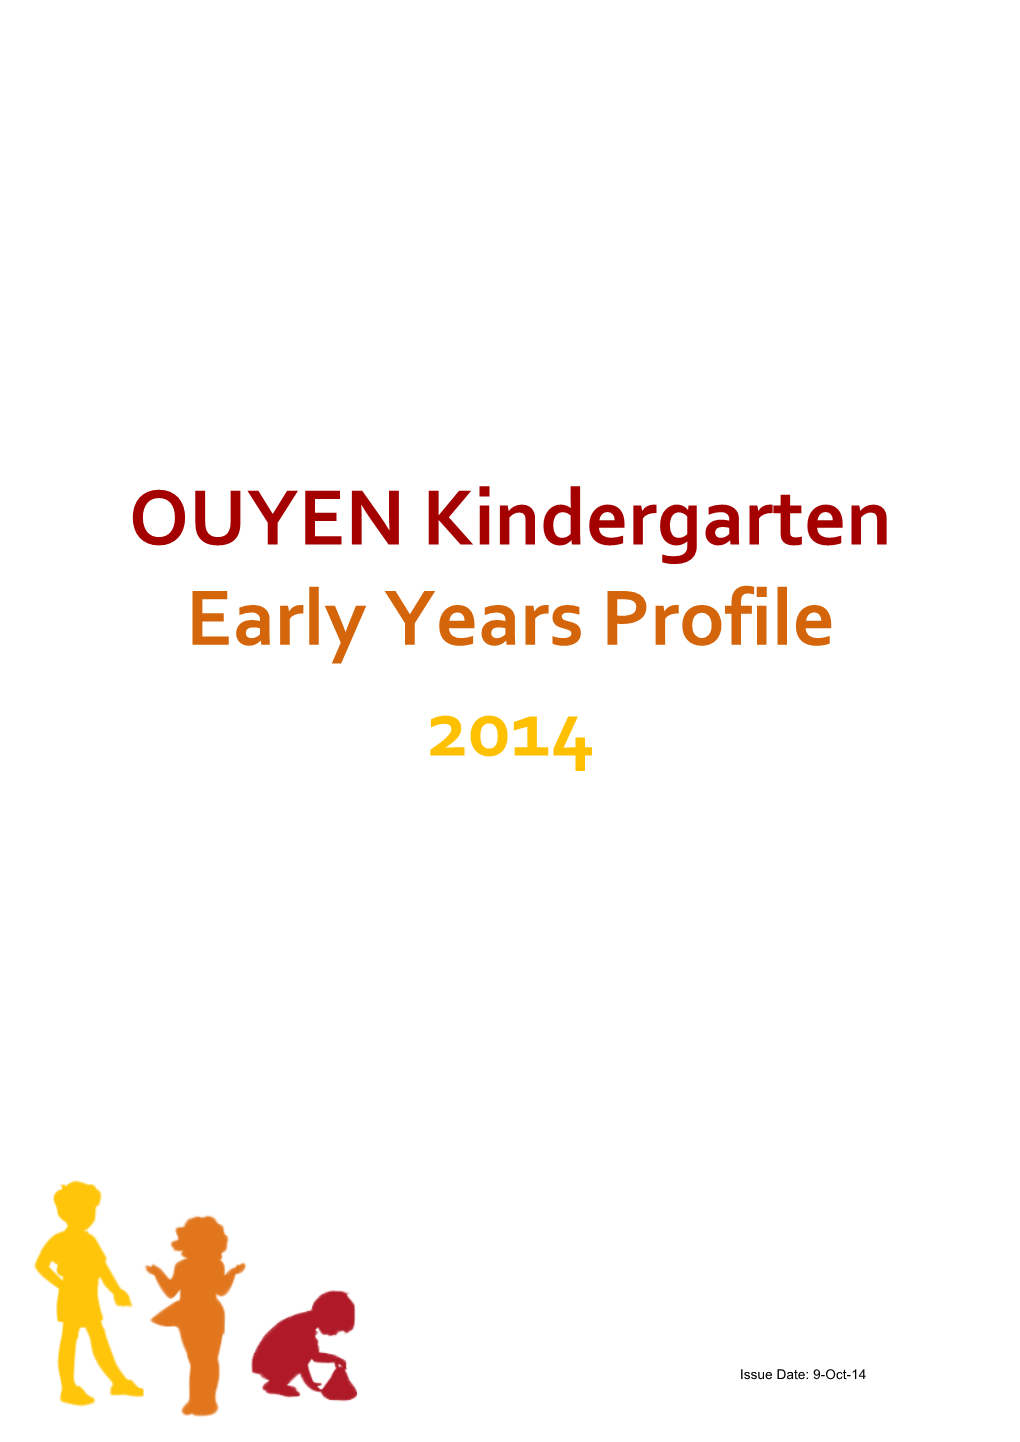 OUYEN Kindergarten Early Years Profile 2014